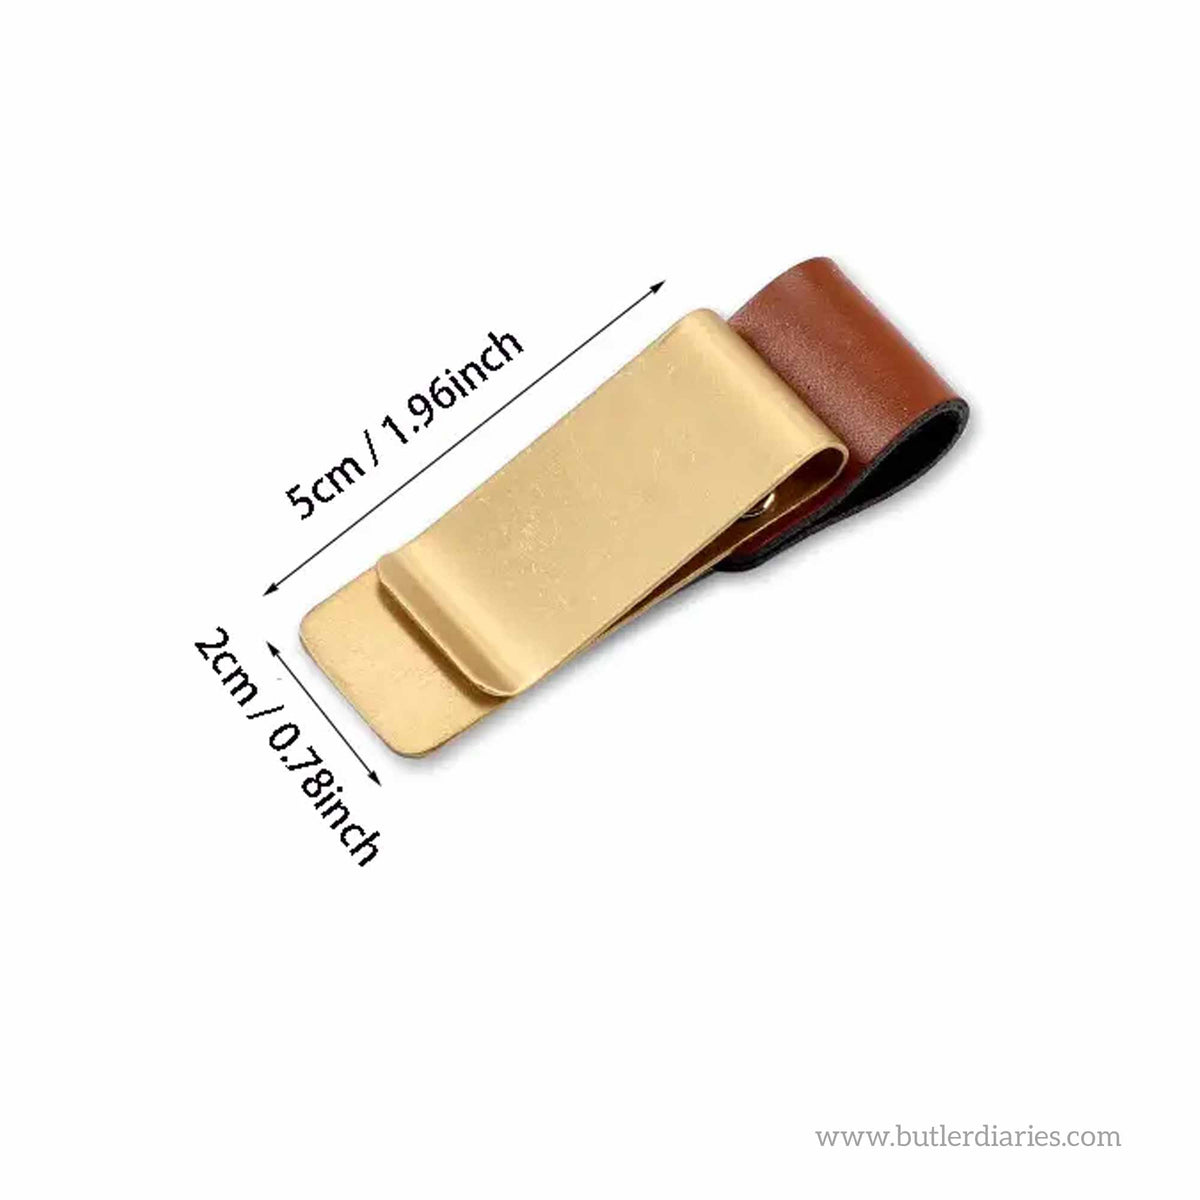 Pen holder clip / business card clip